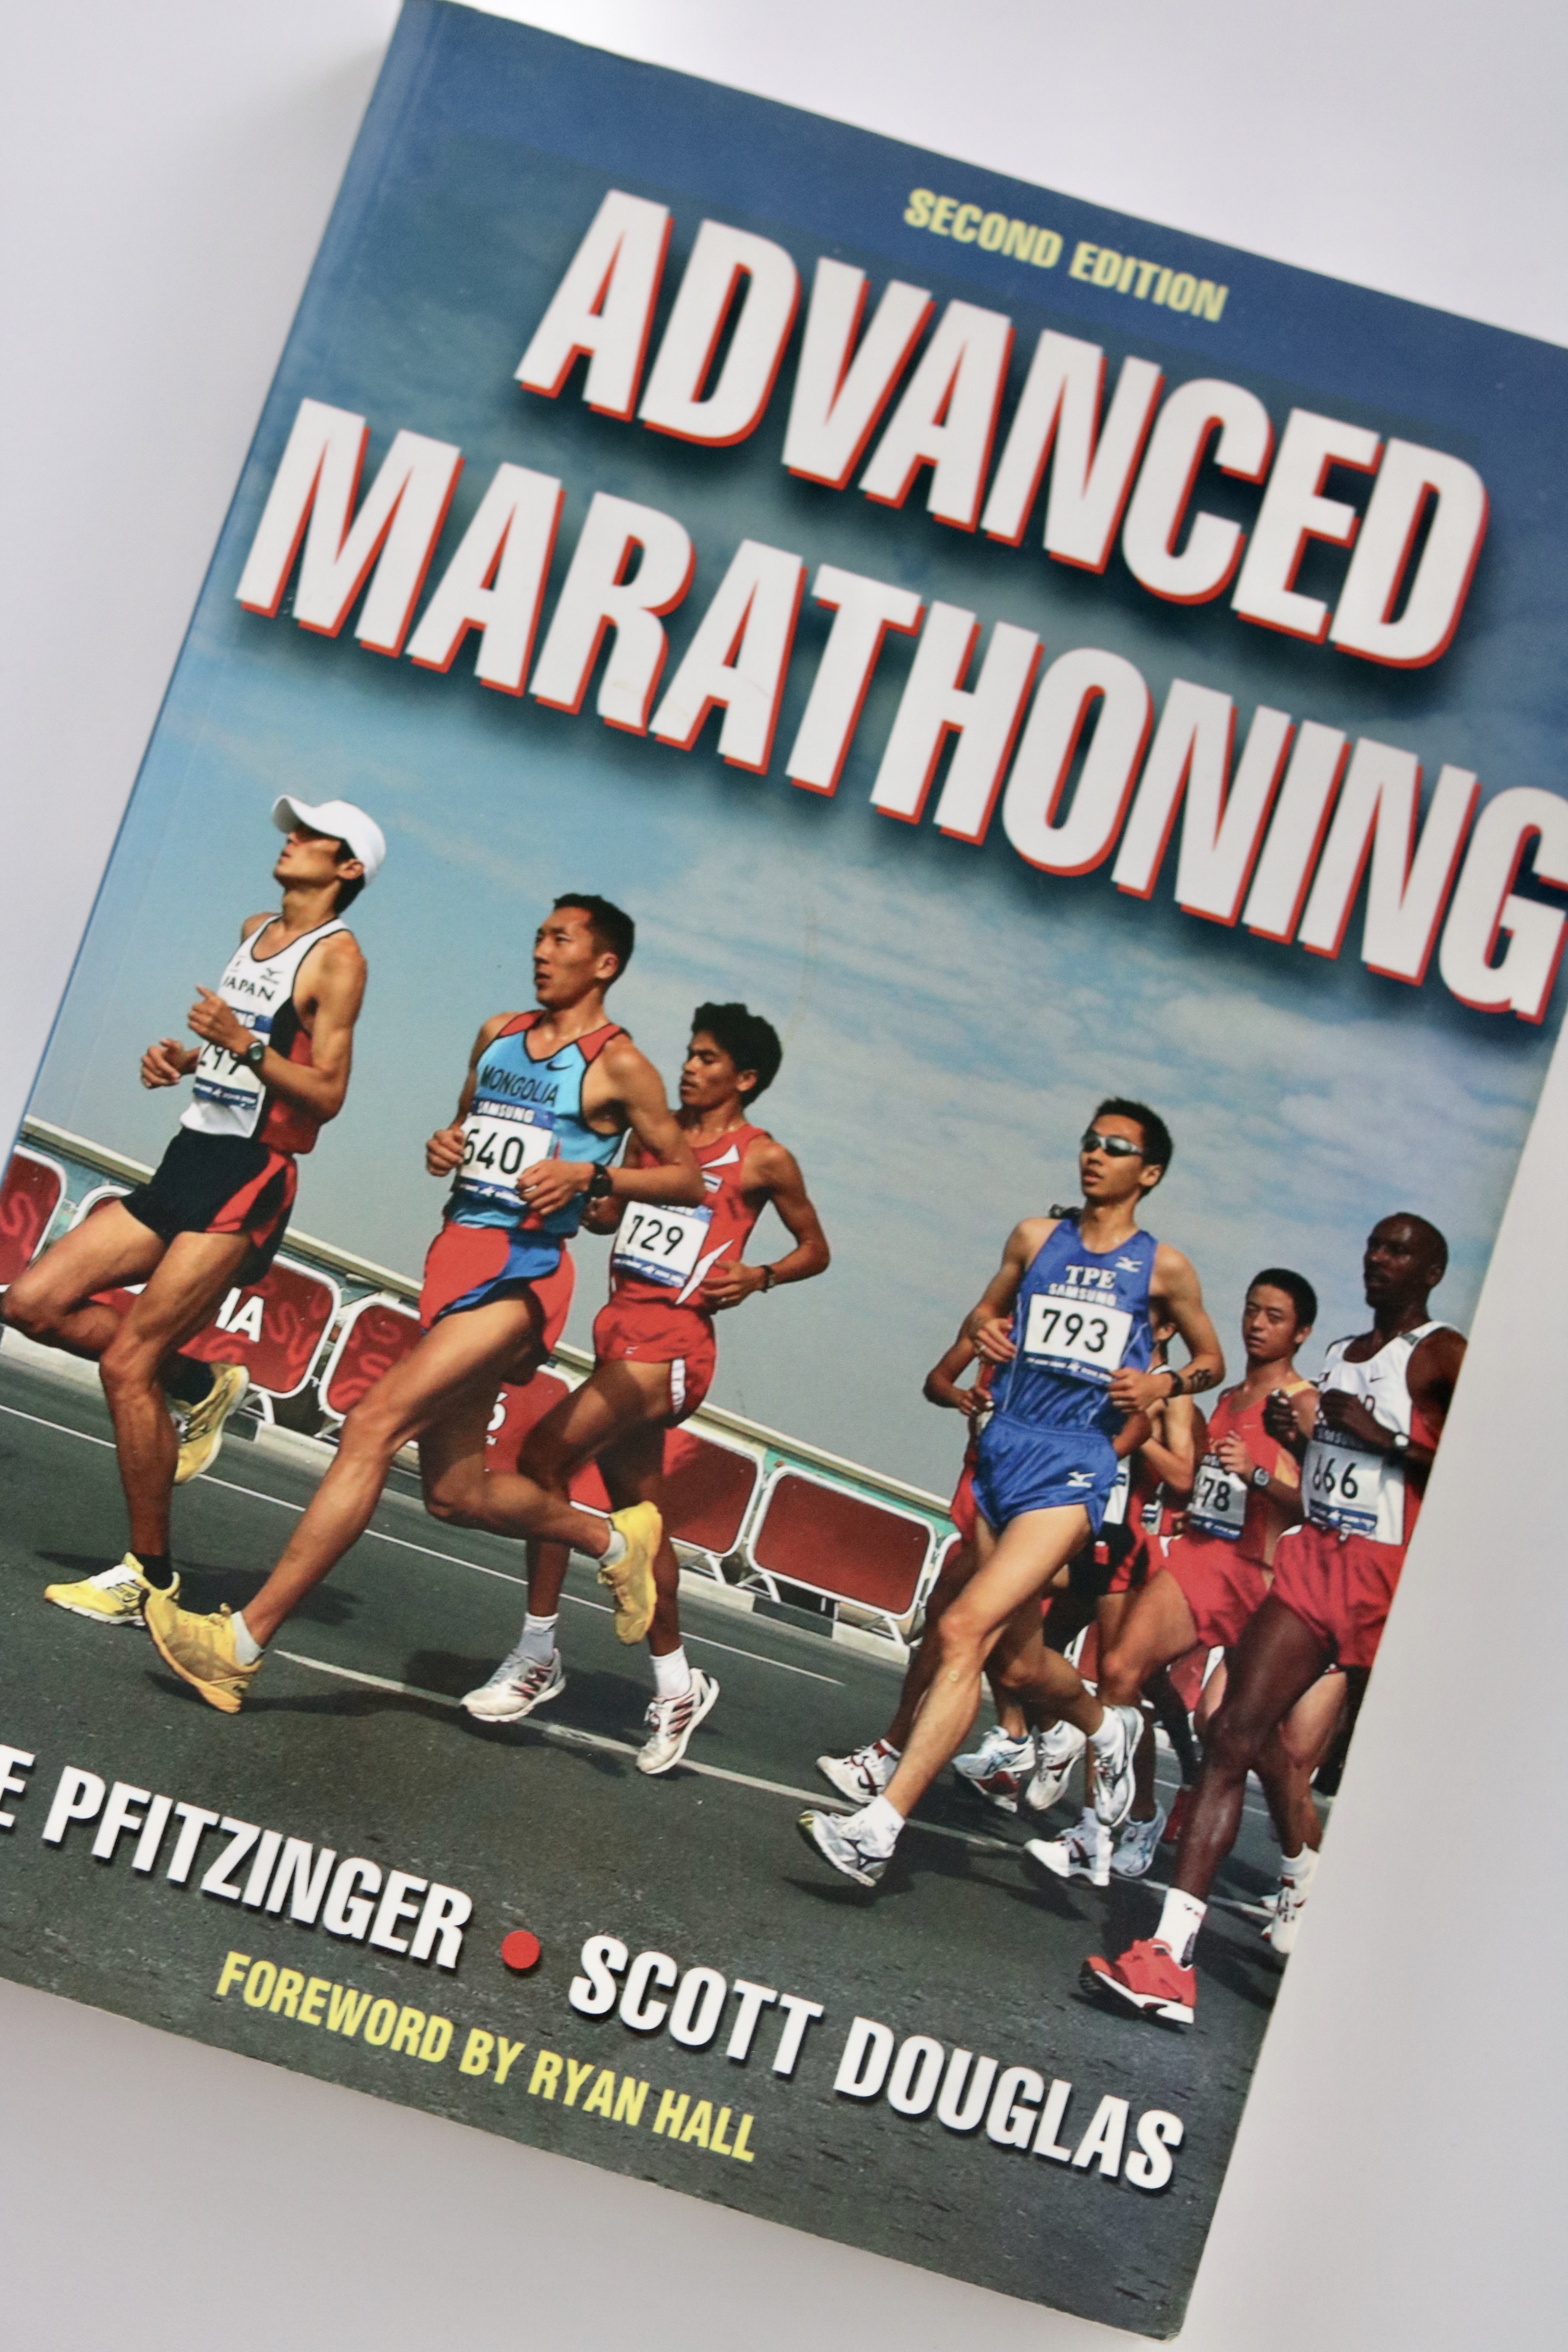 Advanced Marathoning book